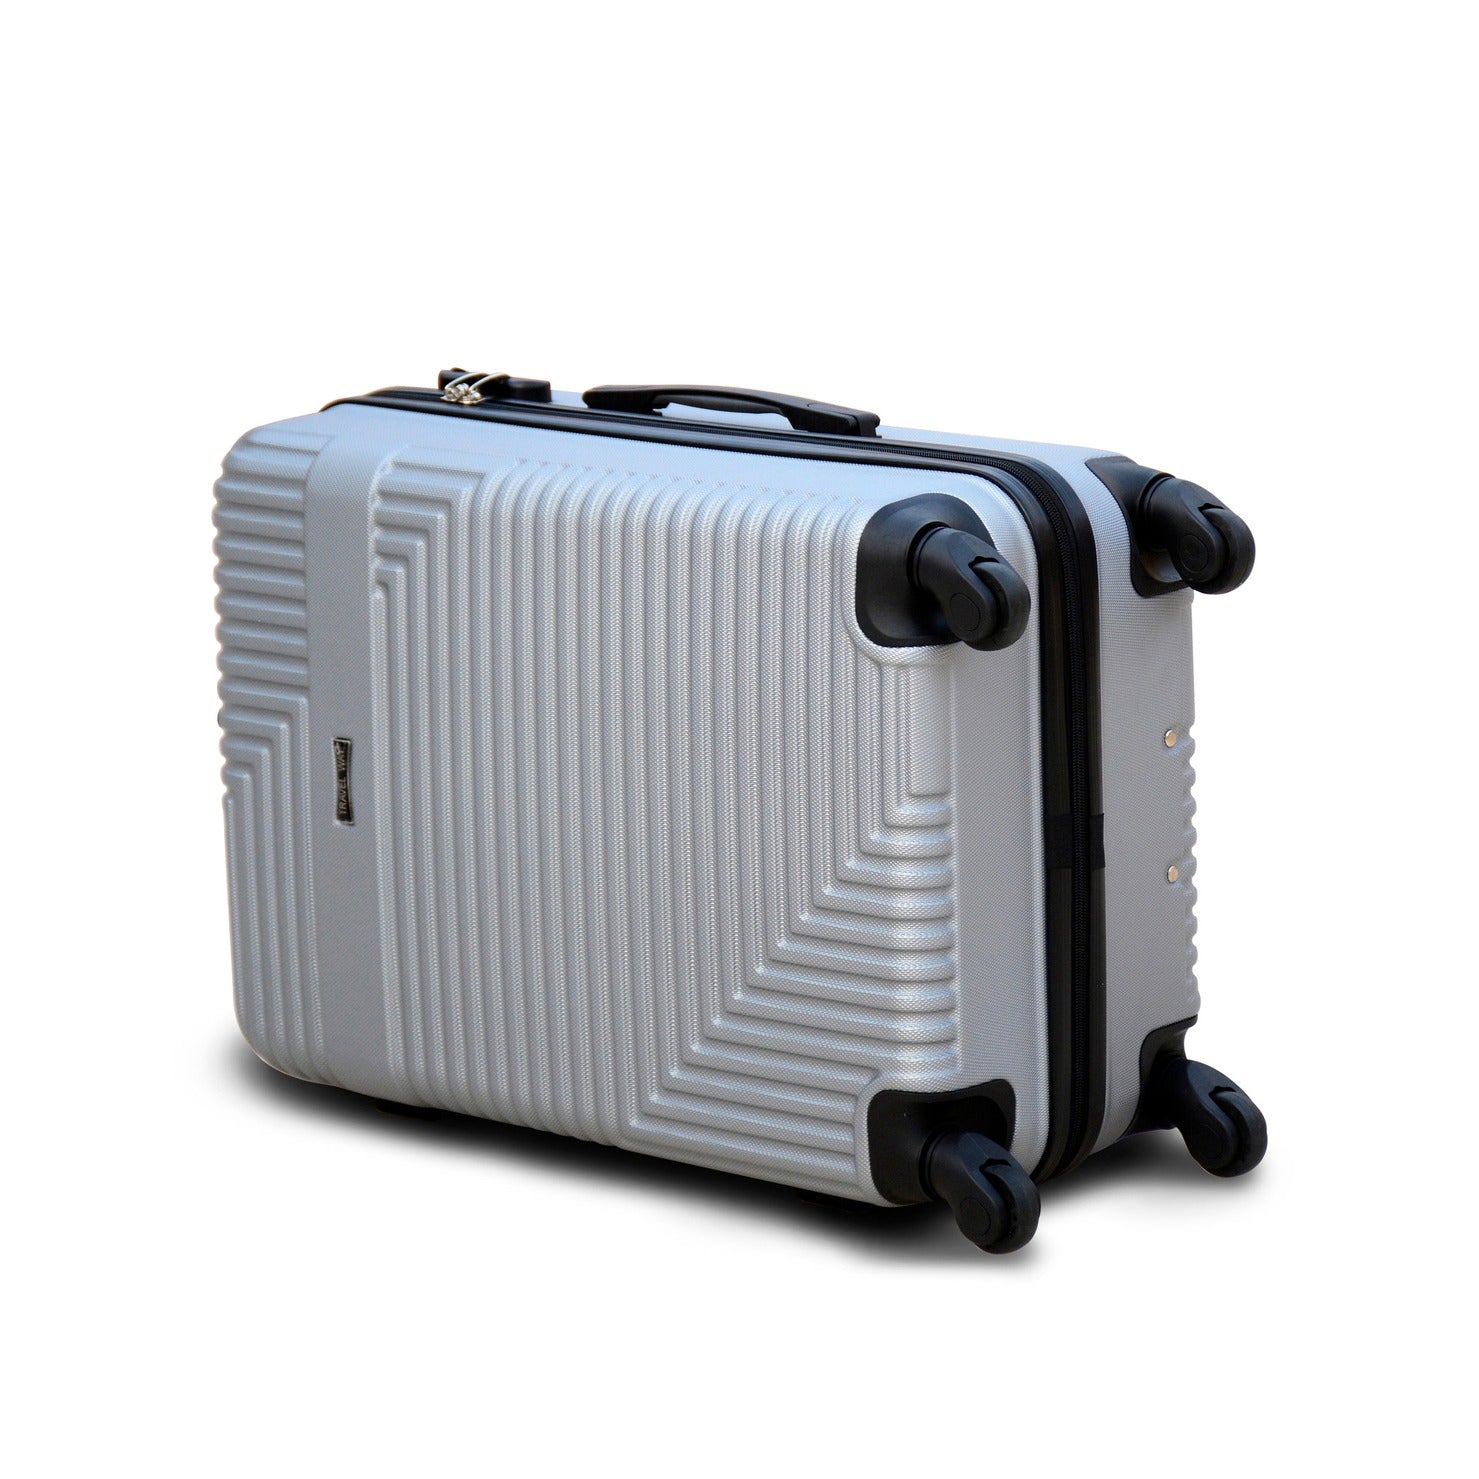 24" Silver Colour Travel Way Cut ABS Luggage Lightweight Hard Case Trolley Bag Zaappy.com